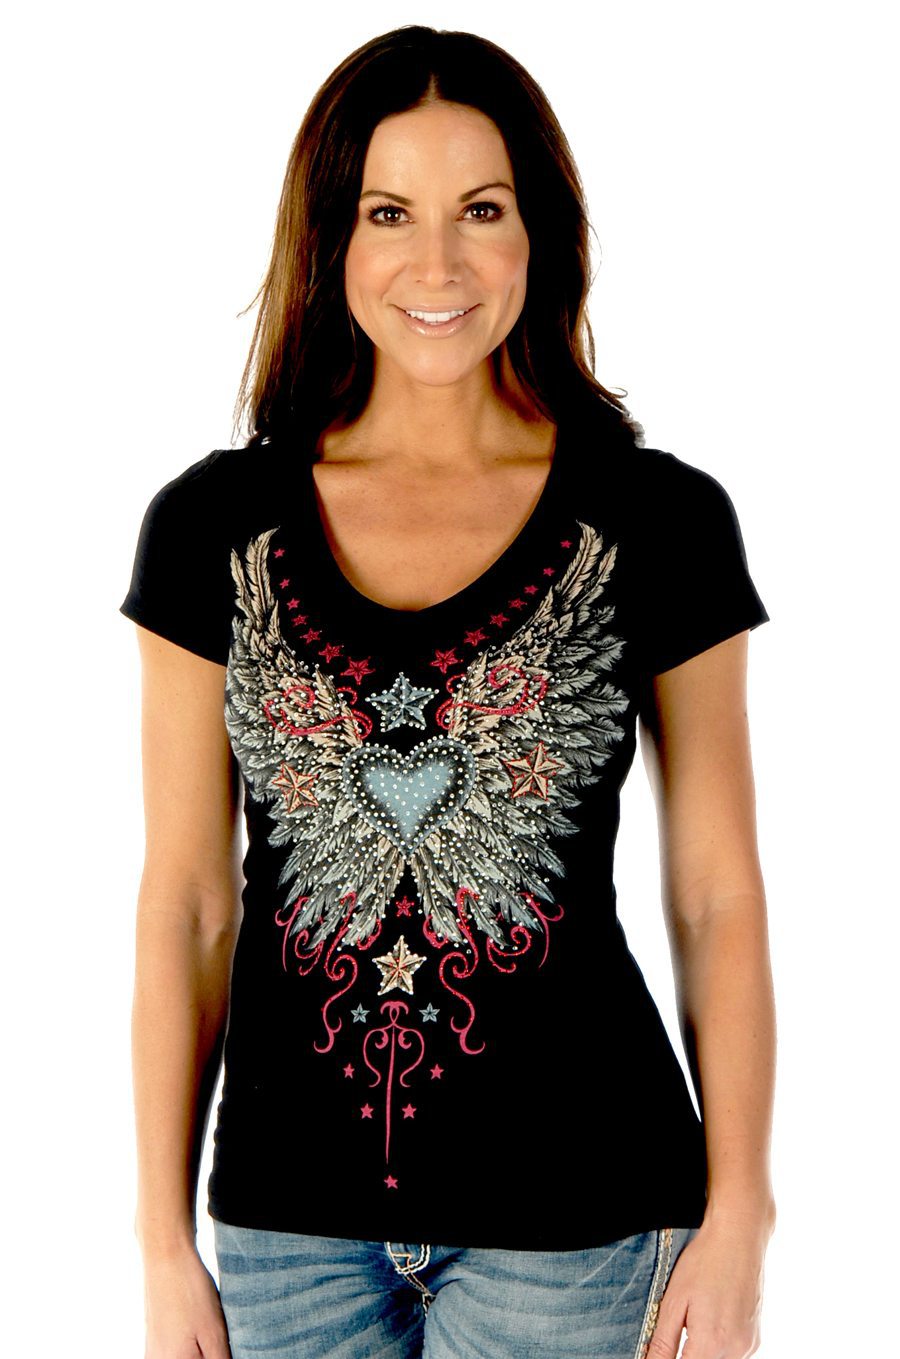 Liberty Wear Women's T-Shirt Vintage Heart & Wings Black Front View